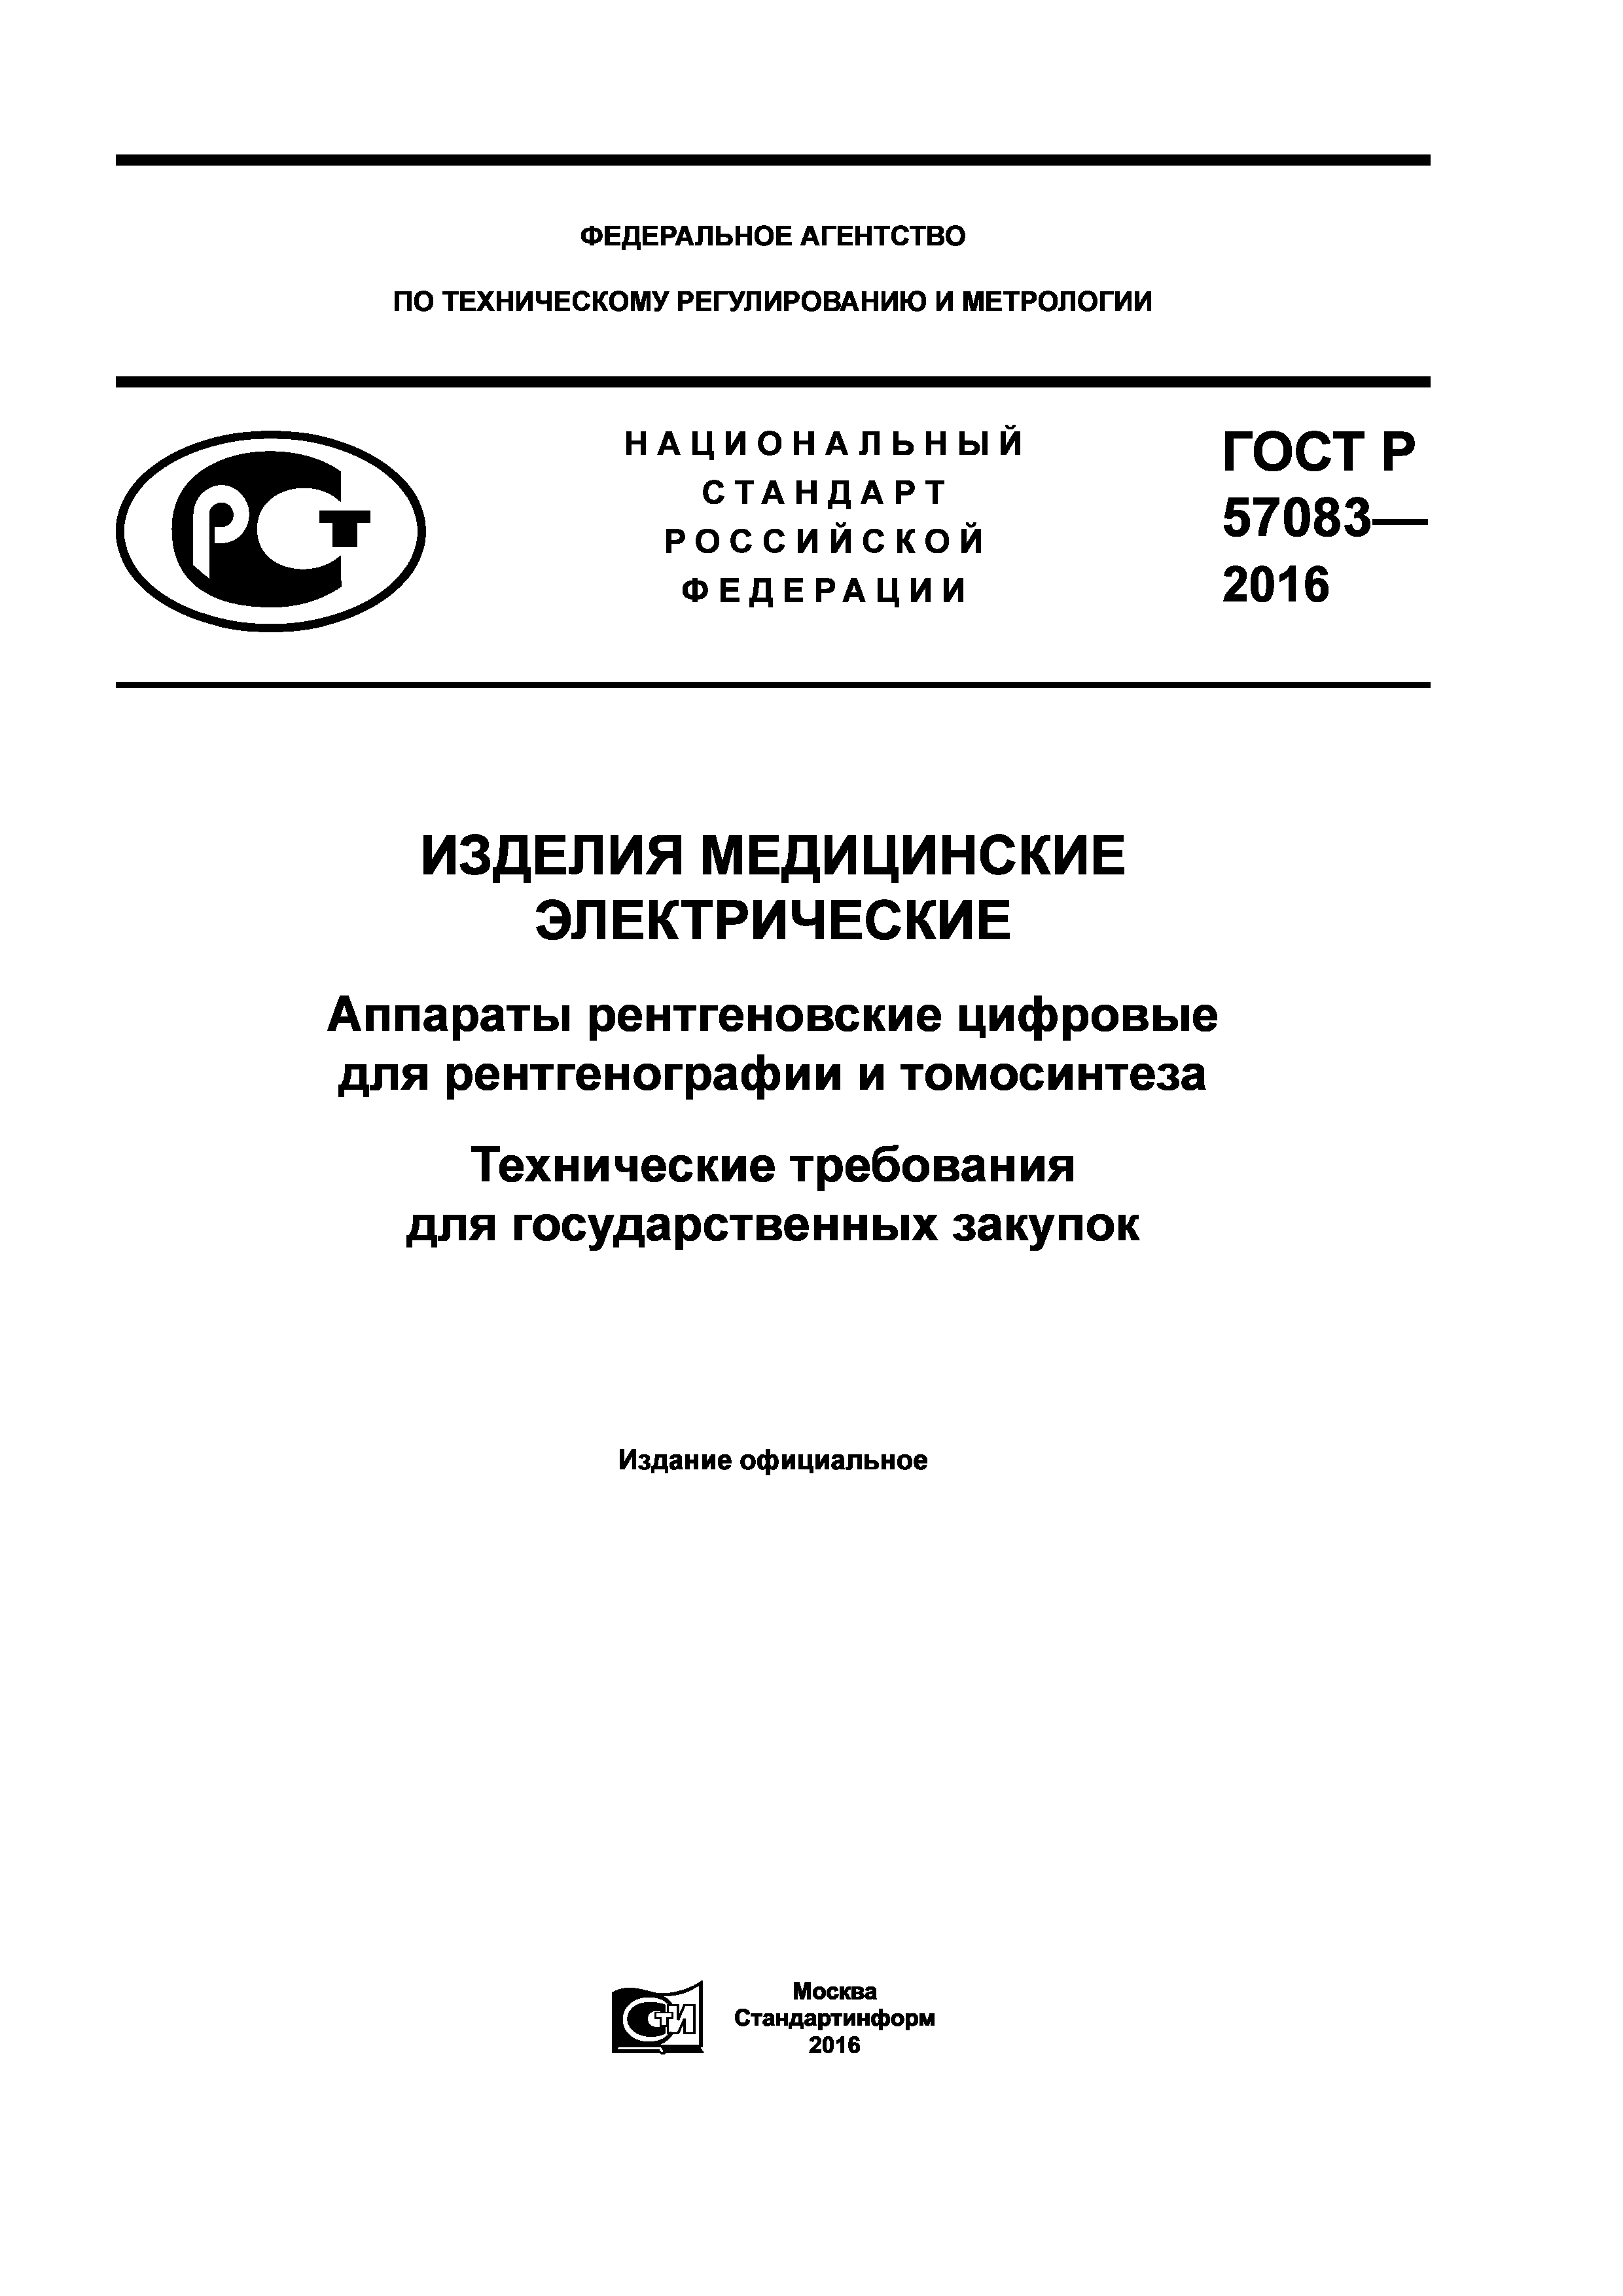 ГОСТ Р 57083-2016